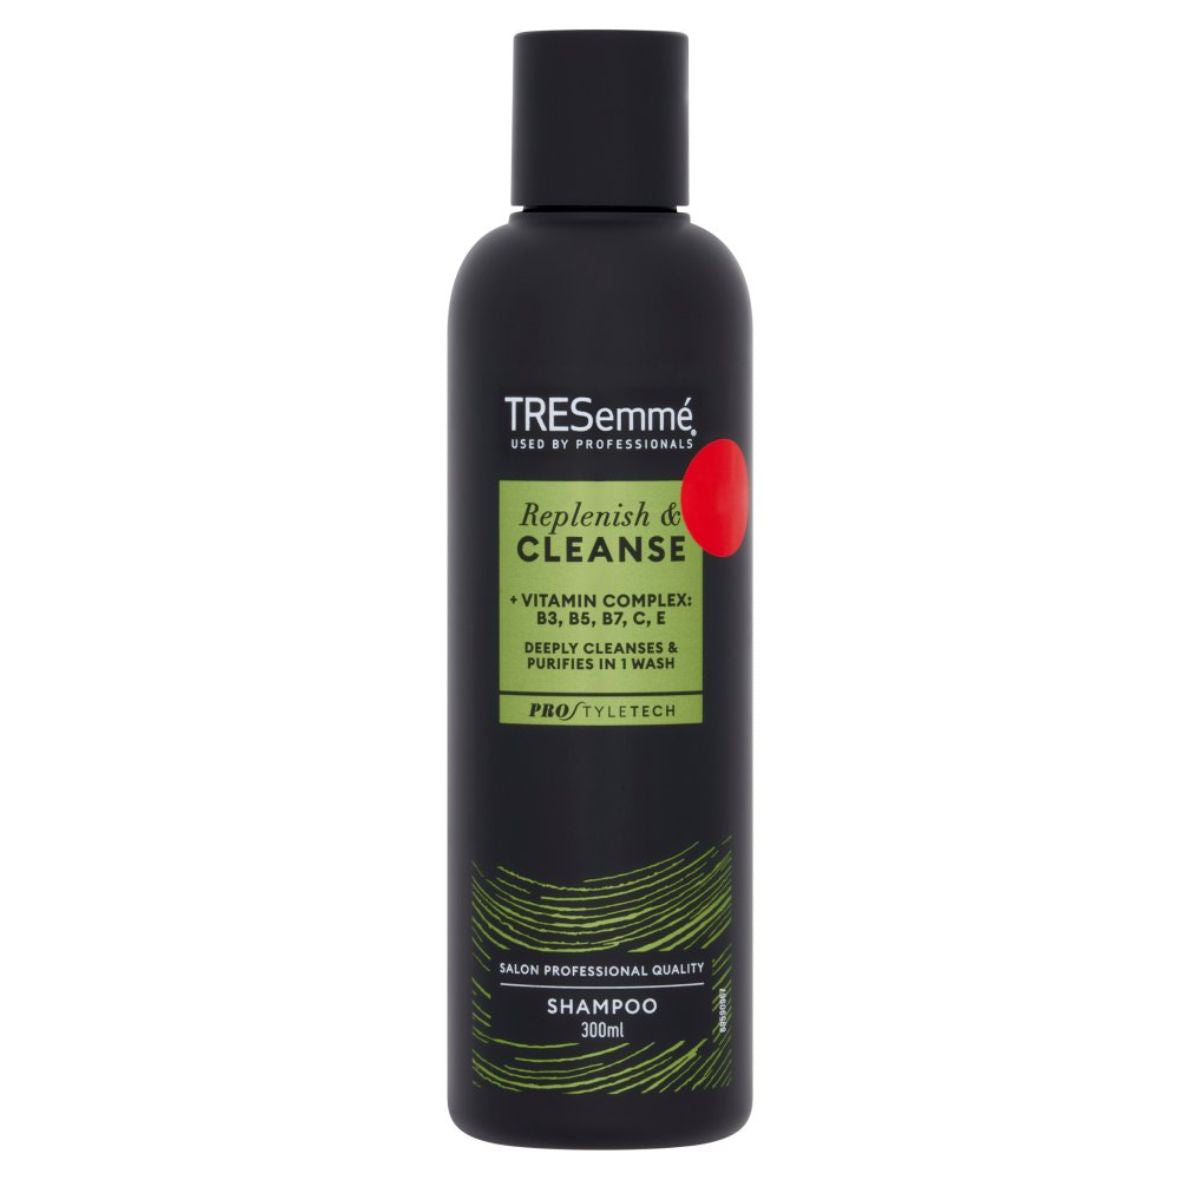 A bottle of TRESemme - PRO Style Tech Replenish & Cleanse Shampoo - 300ml.